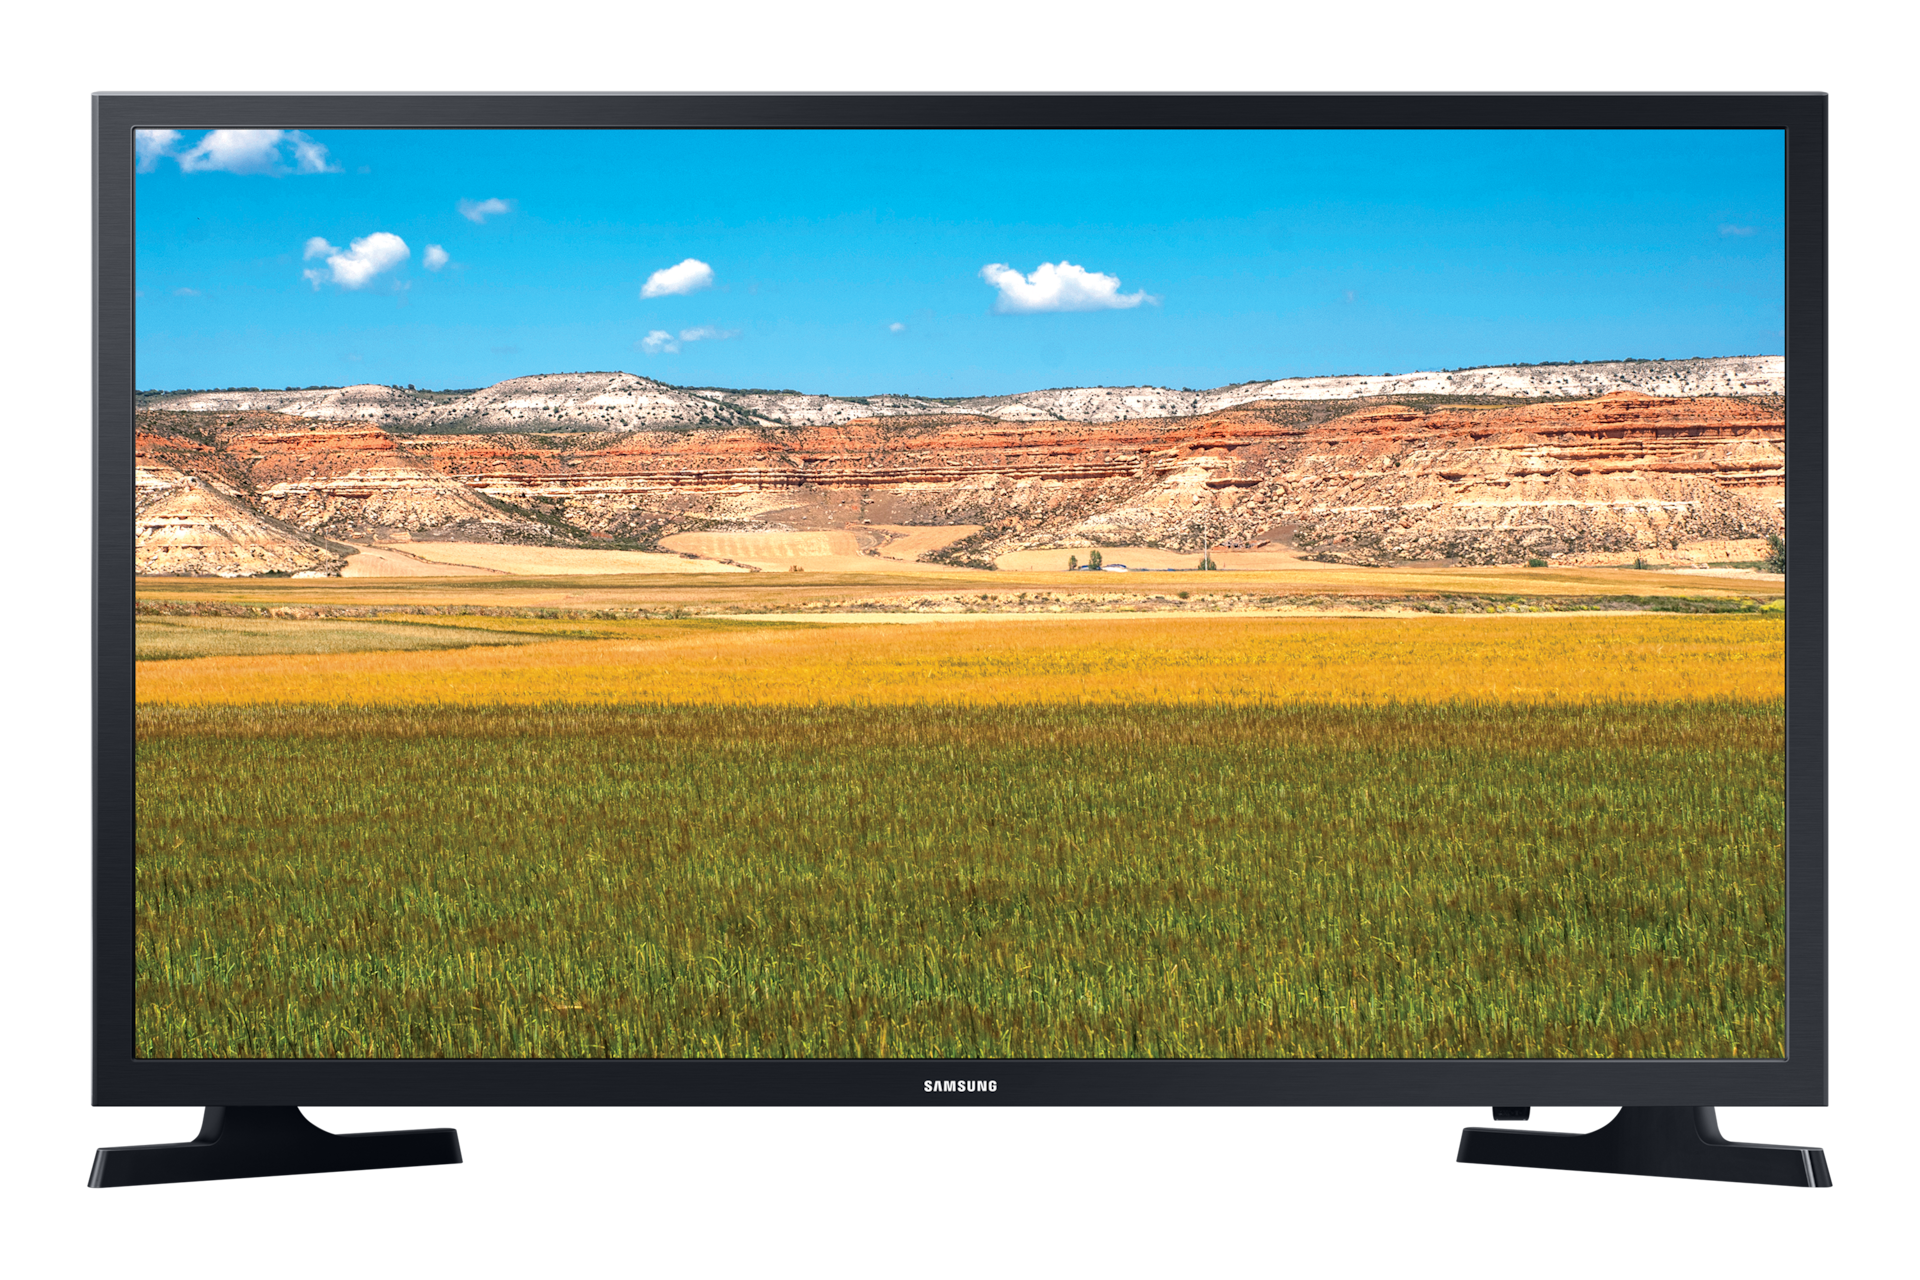 Samsung Televizor Led, Hd Smart 32t4302, 80 Cm (2021)